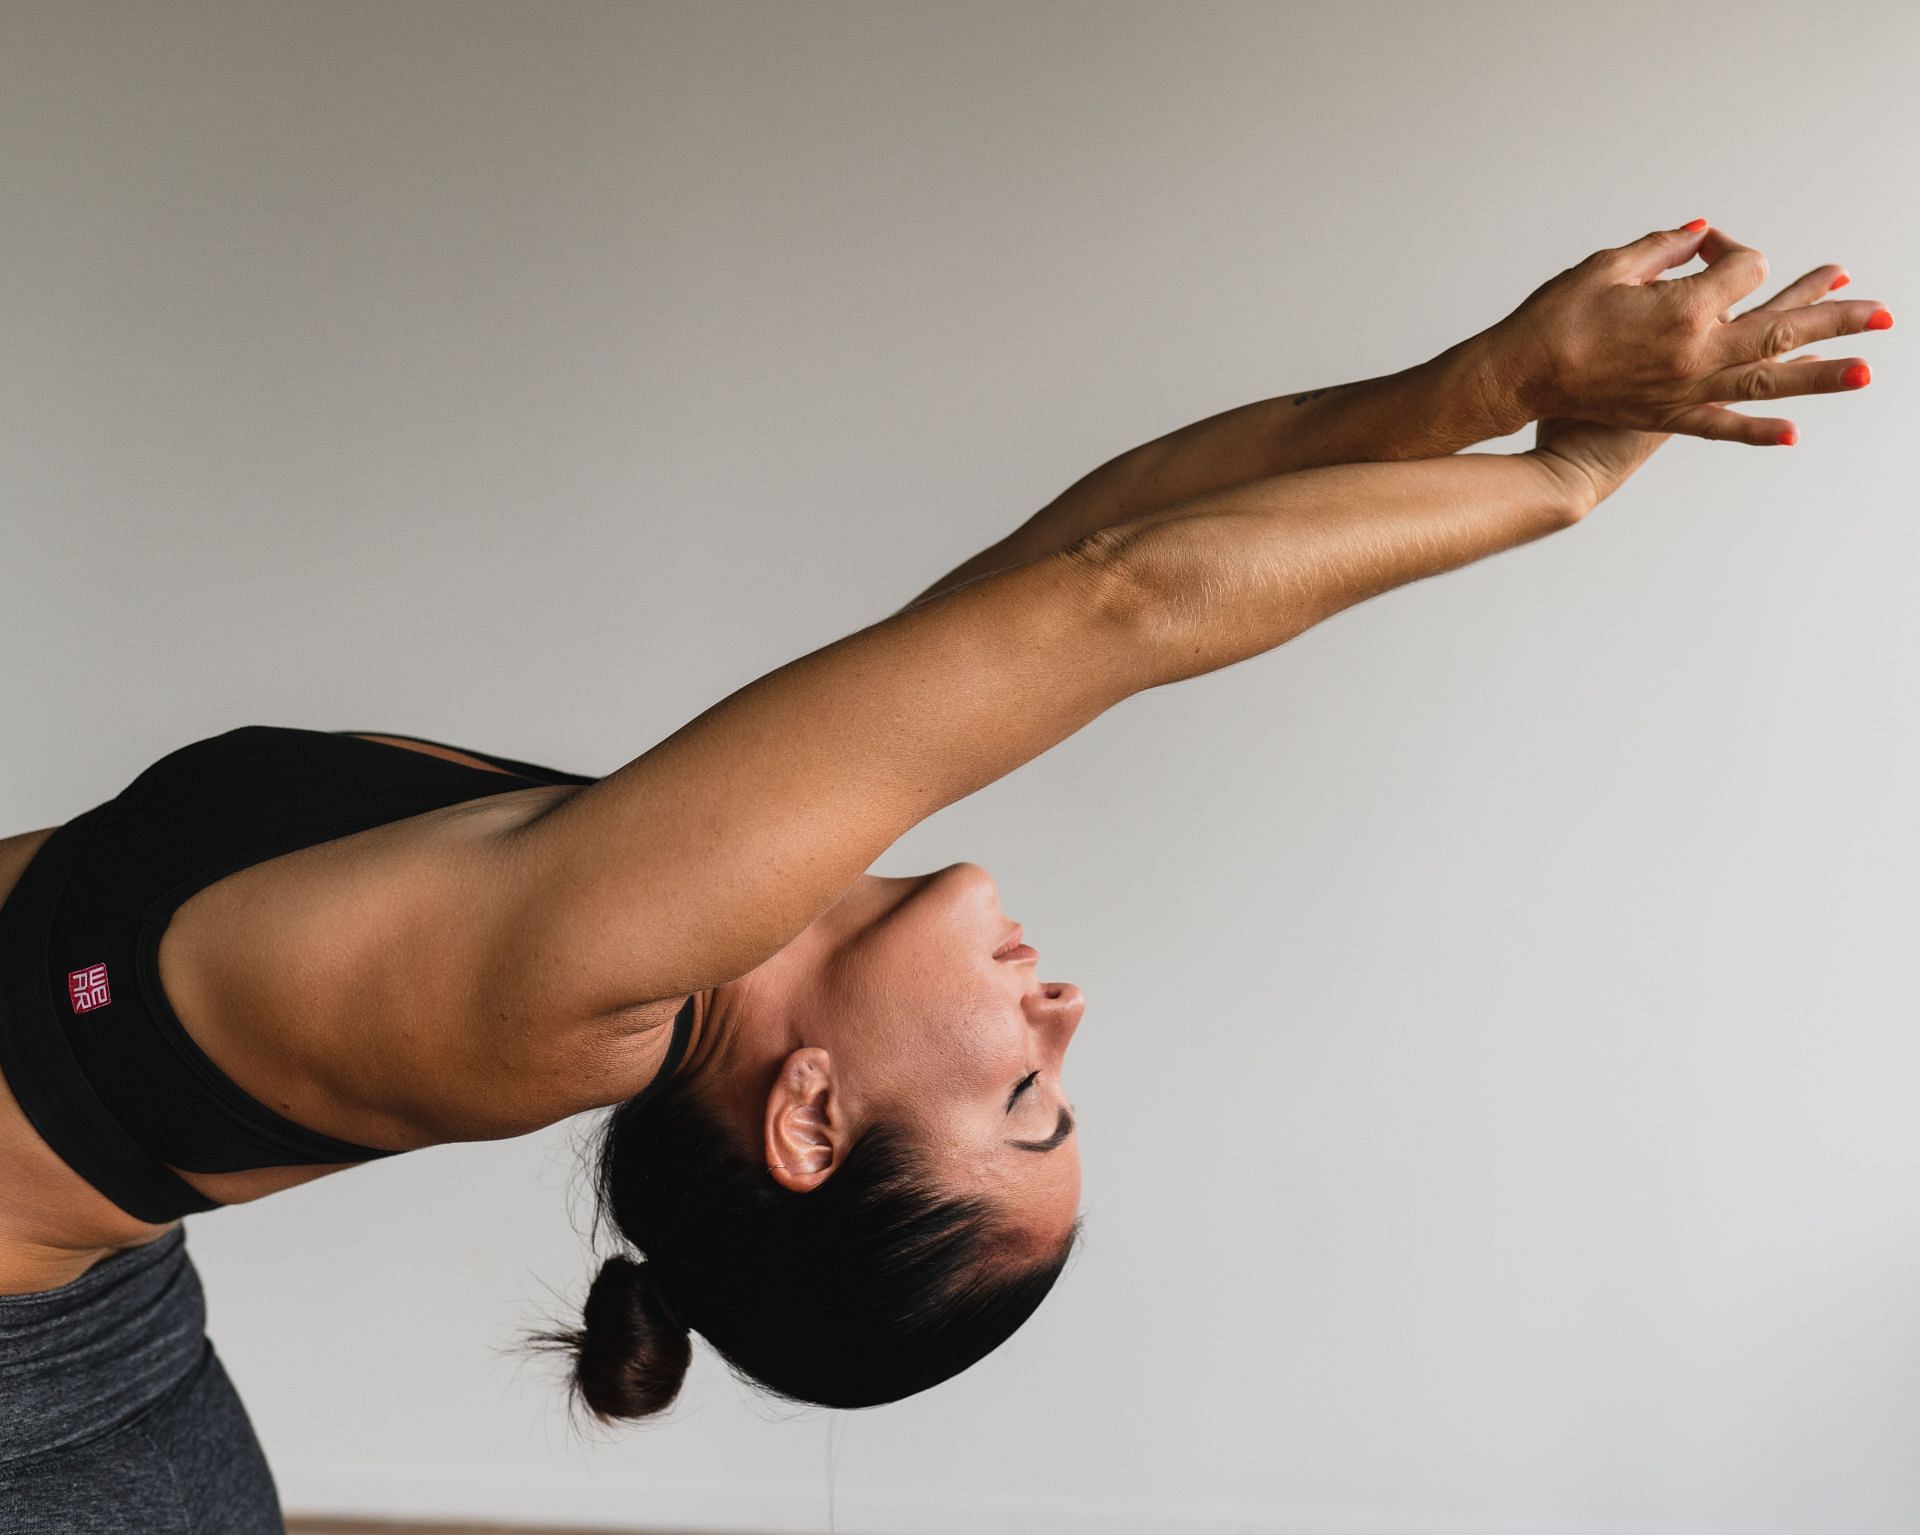 Improves your balance and strengthens your core. (Image via Unsplash/Dane Wetton)